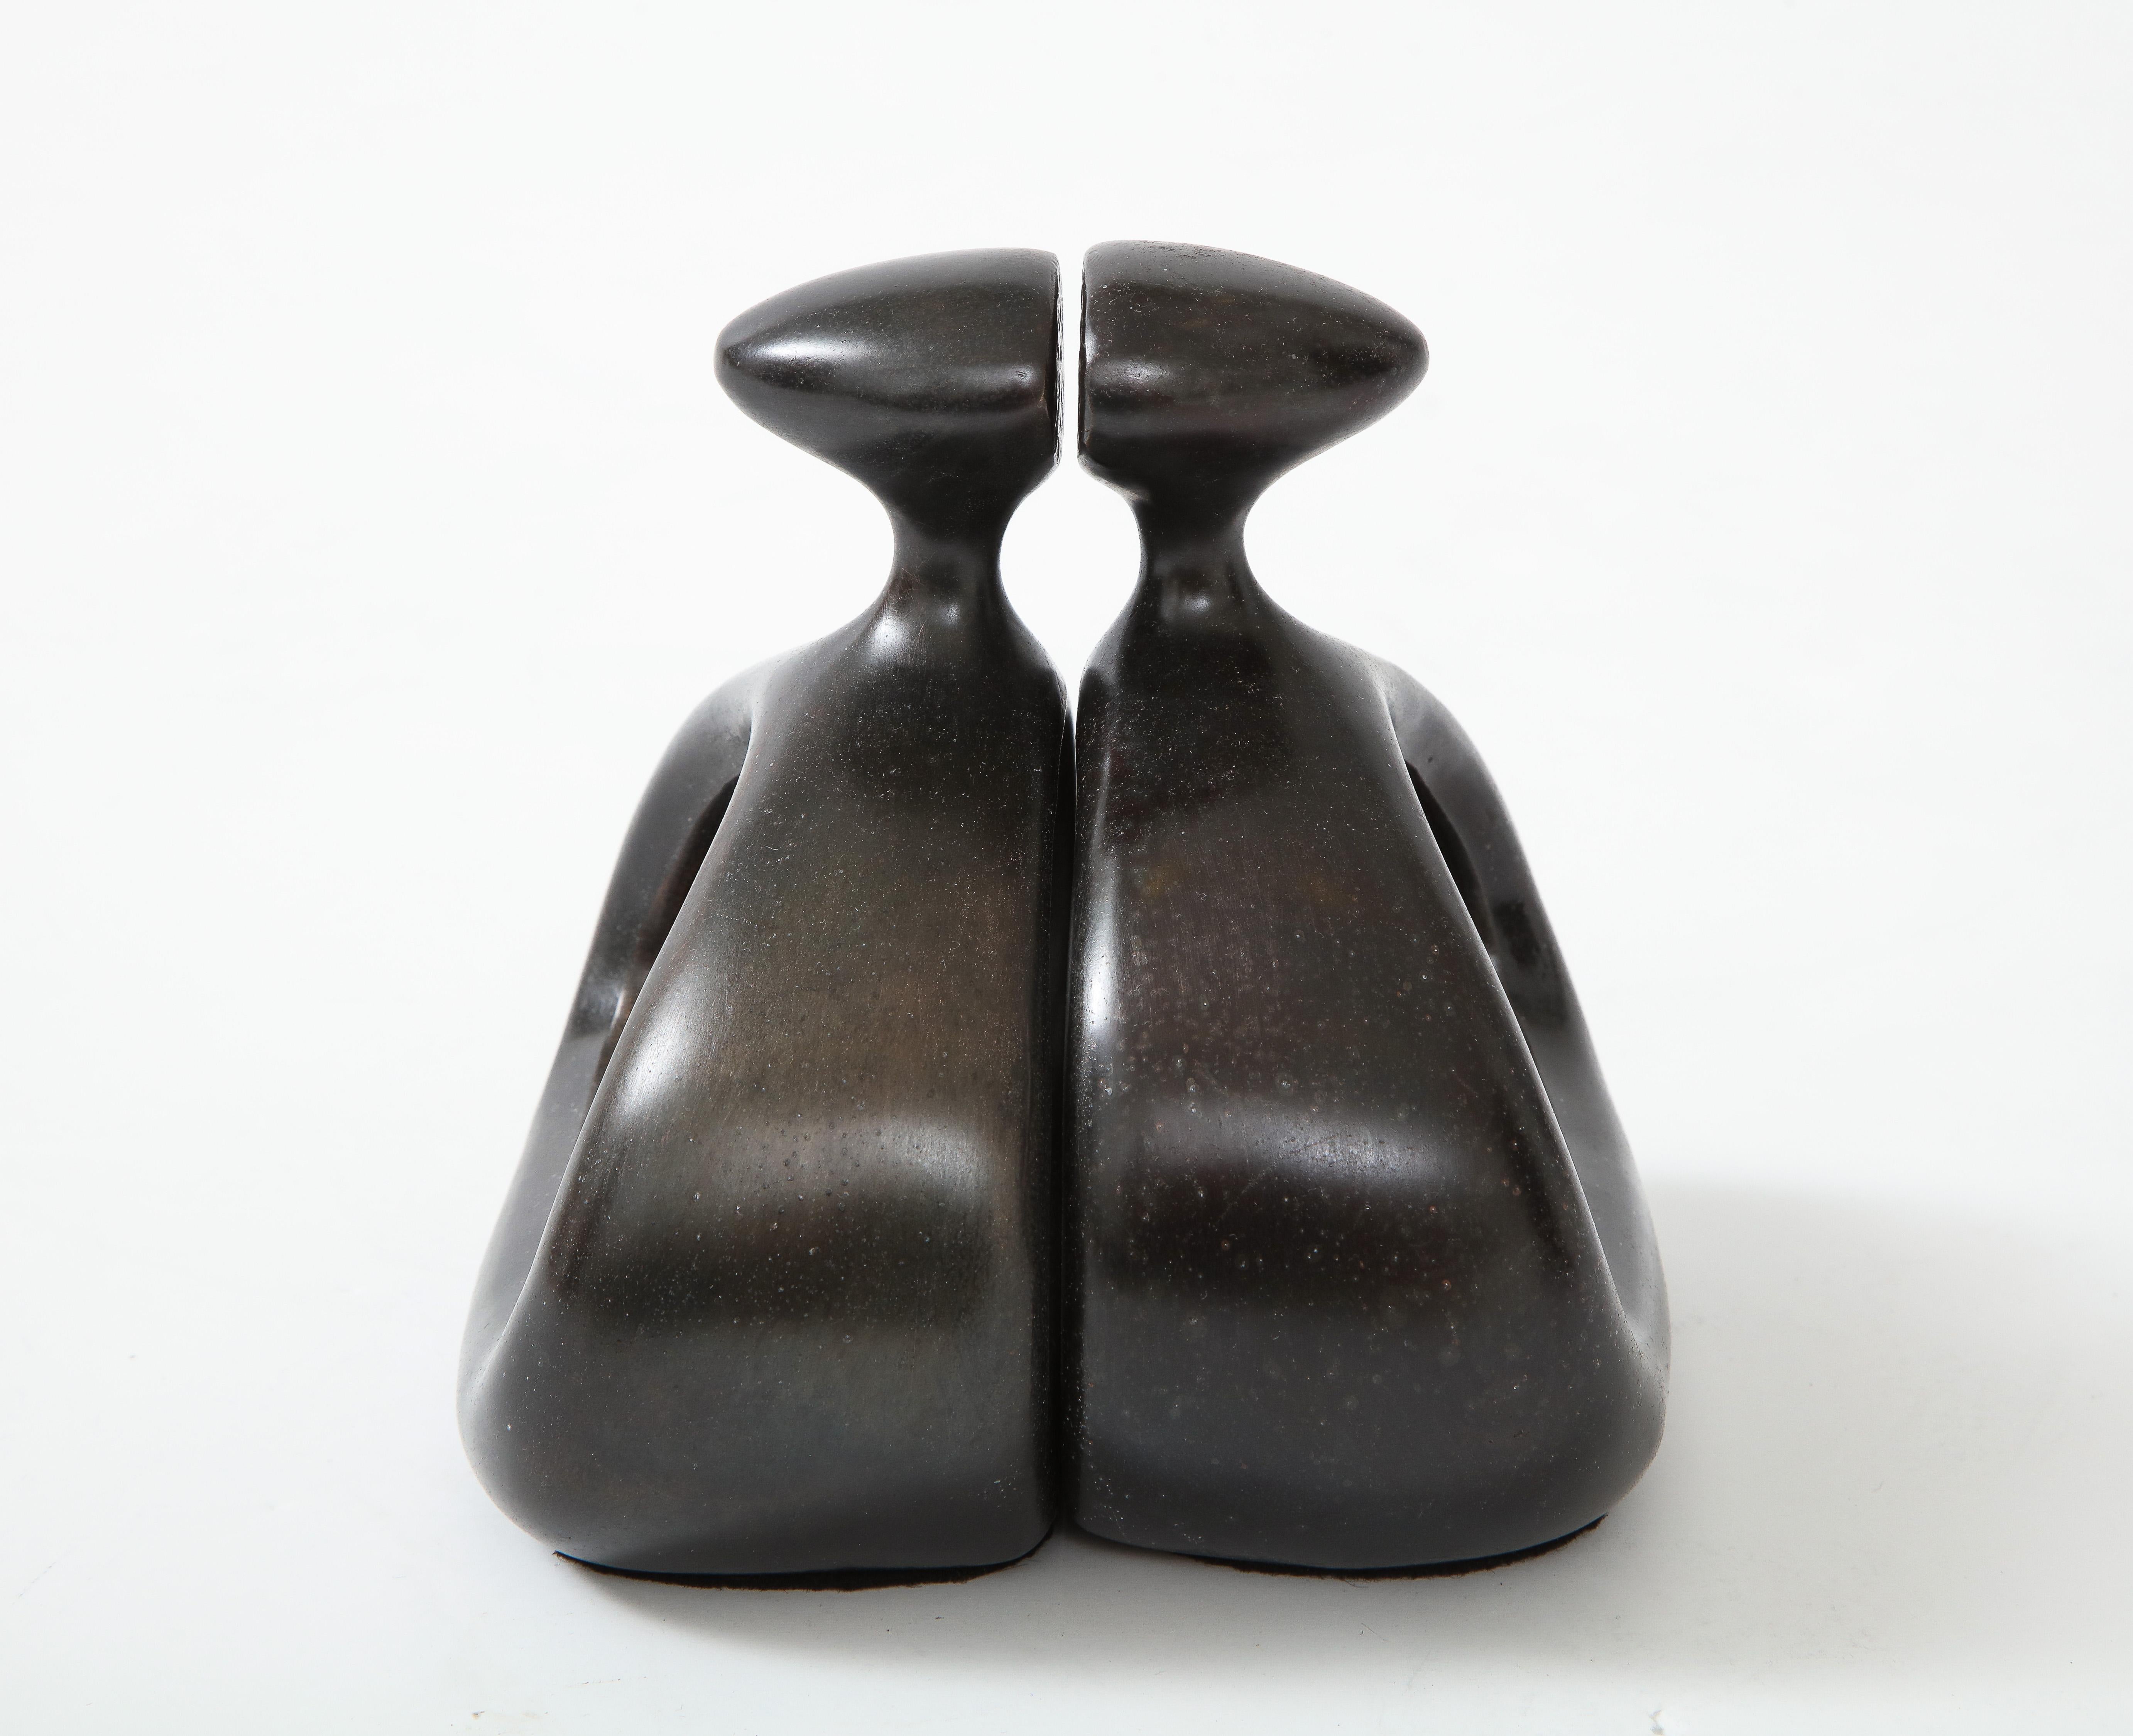 Set of modernist stylized stirrup bookends in a dark bronze.